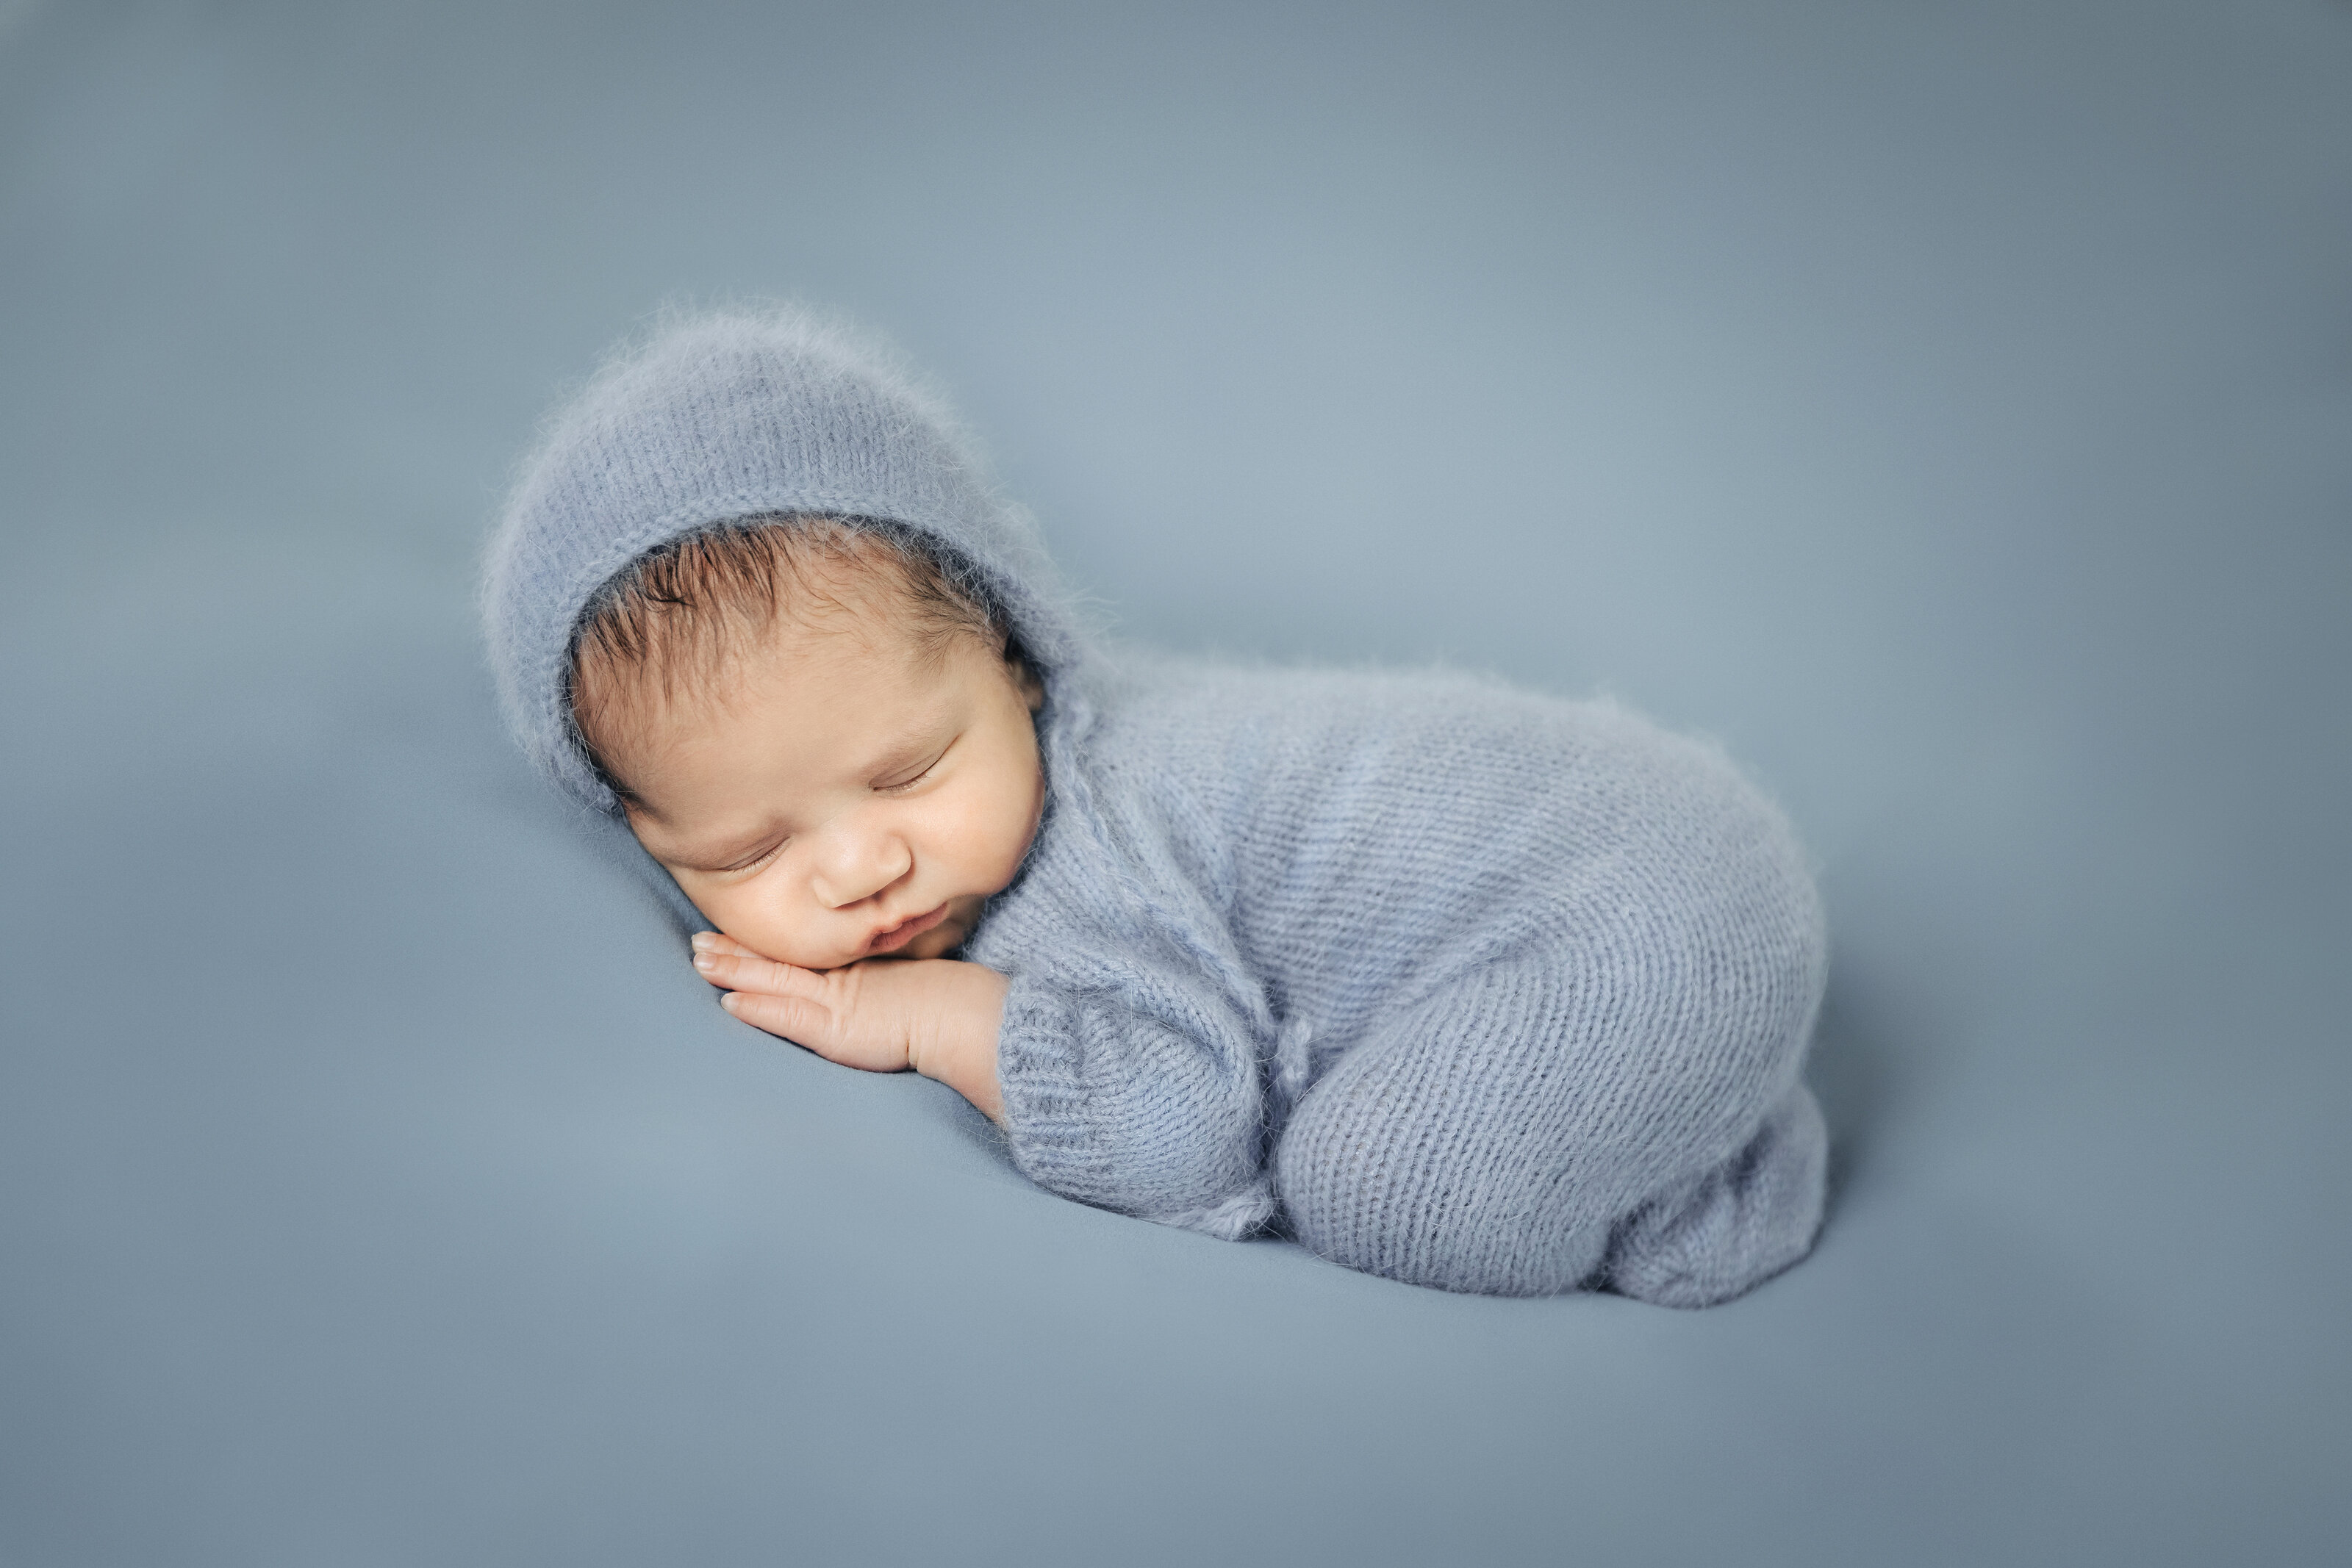 Newborn baby sleeping during photoshoot taken by best NJ baby photographer